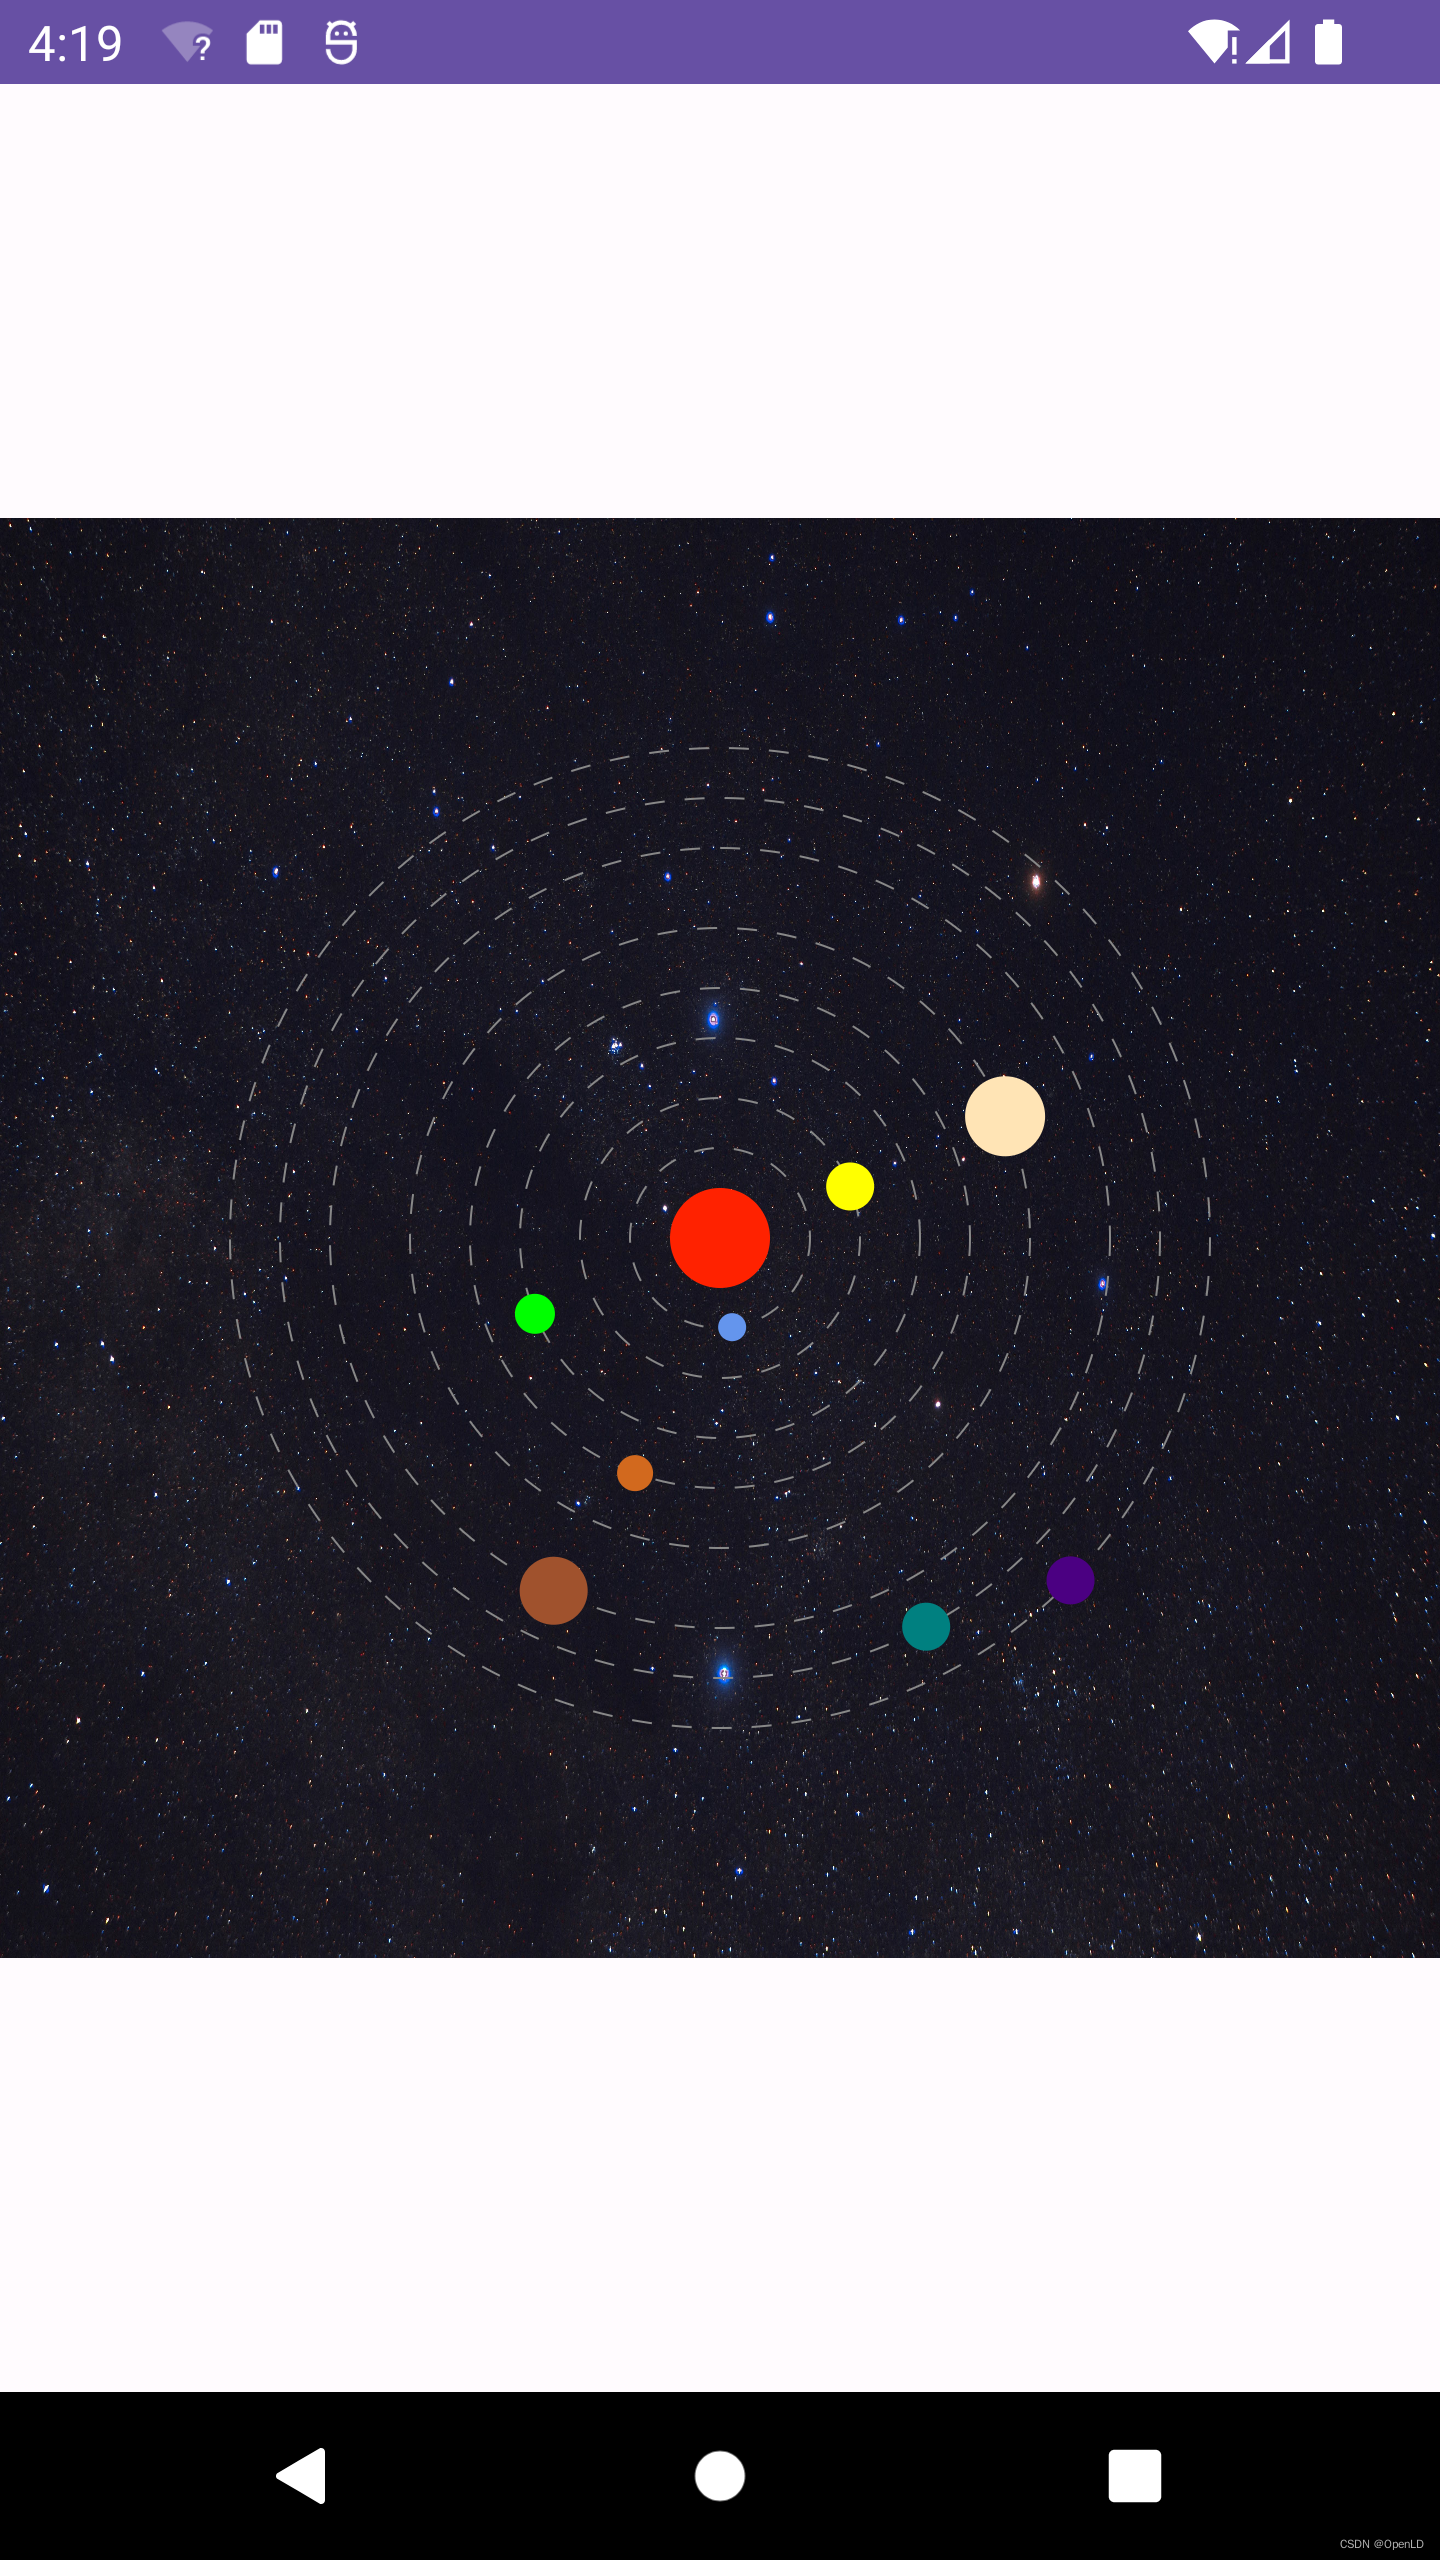 Android自定义View实现八大行星绕太阳转动效果